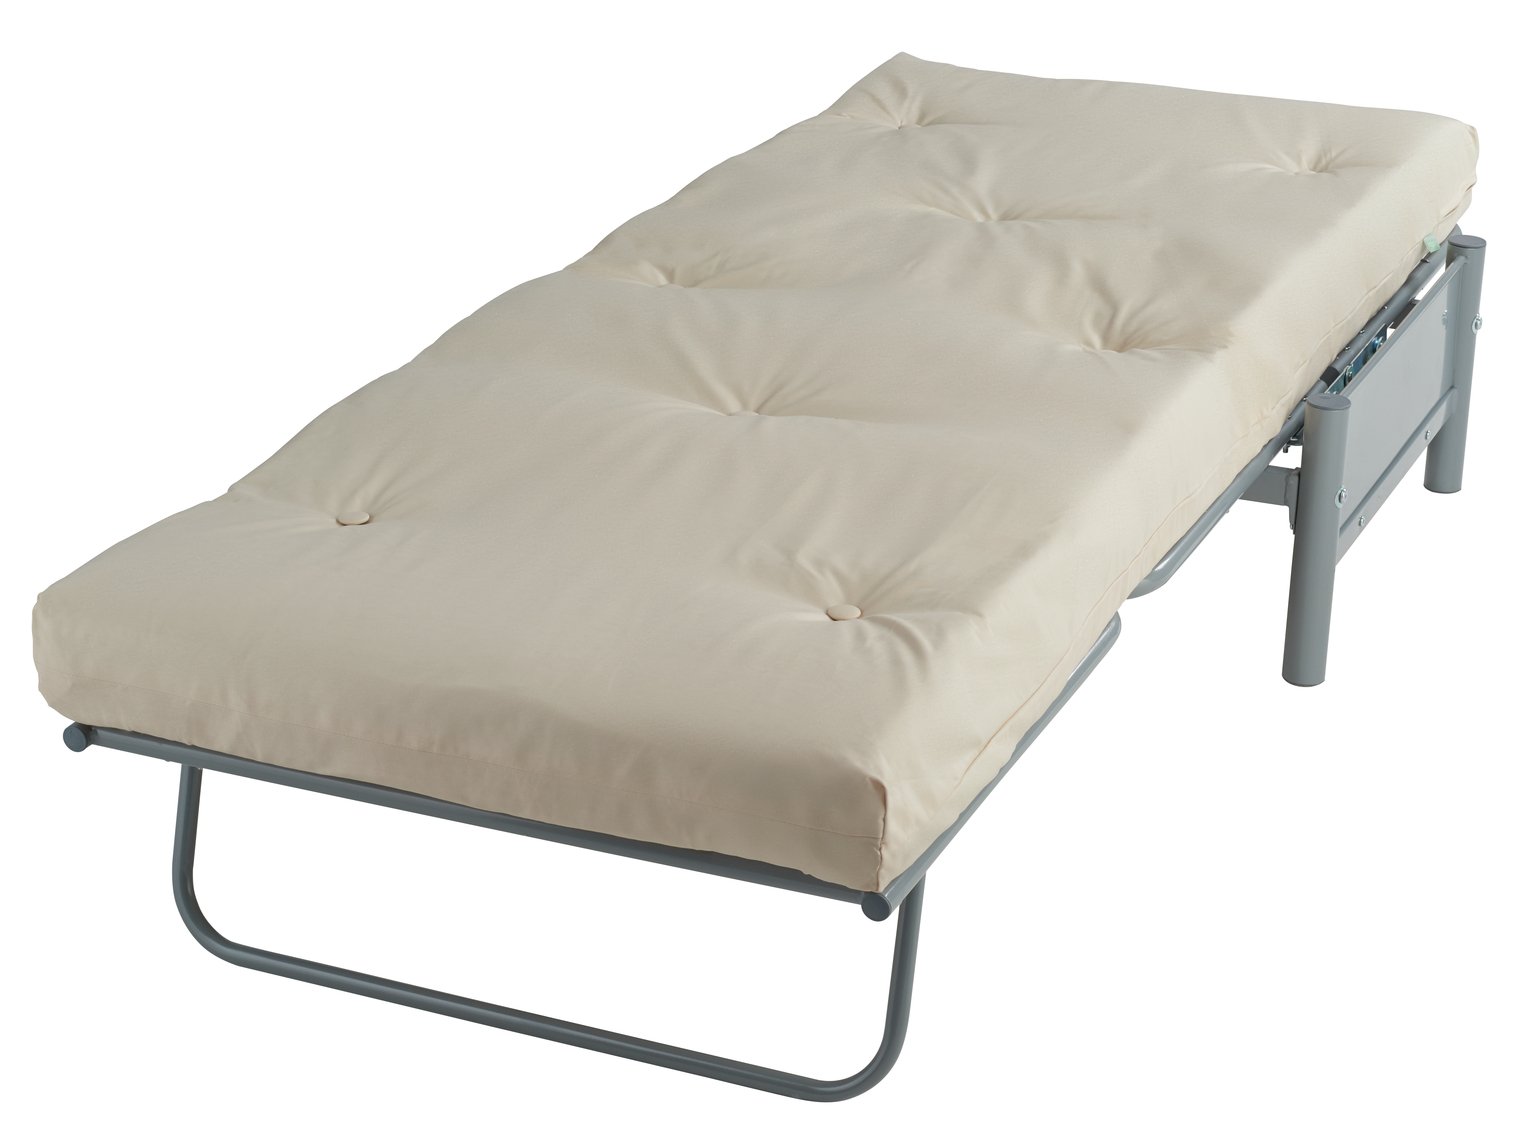 Argos Home Single Metal Futon Sofa Bed w/ Mattress Reviews